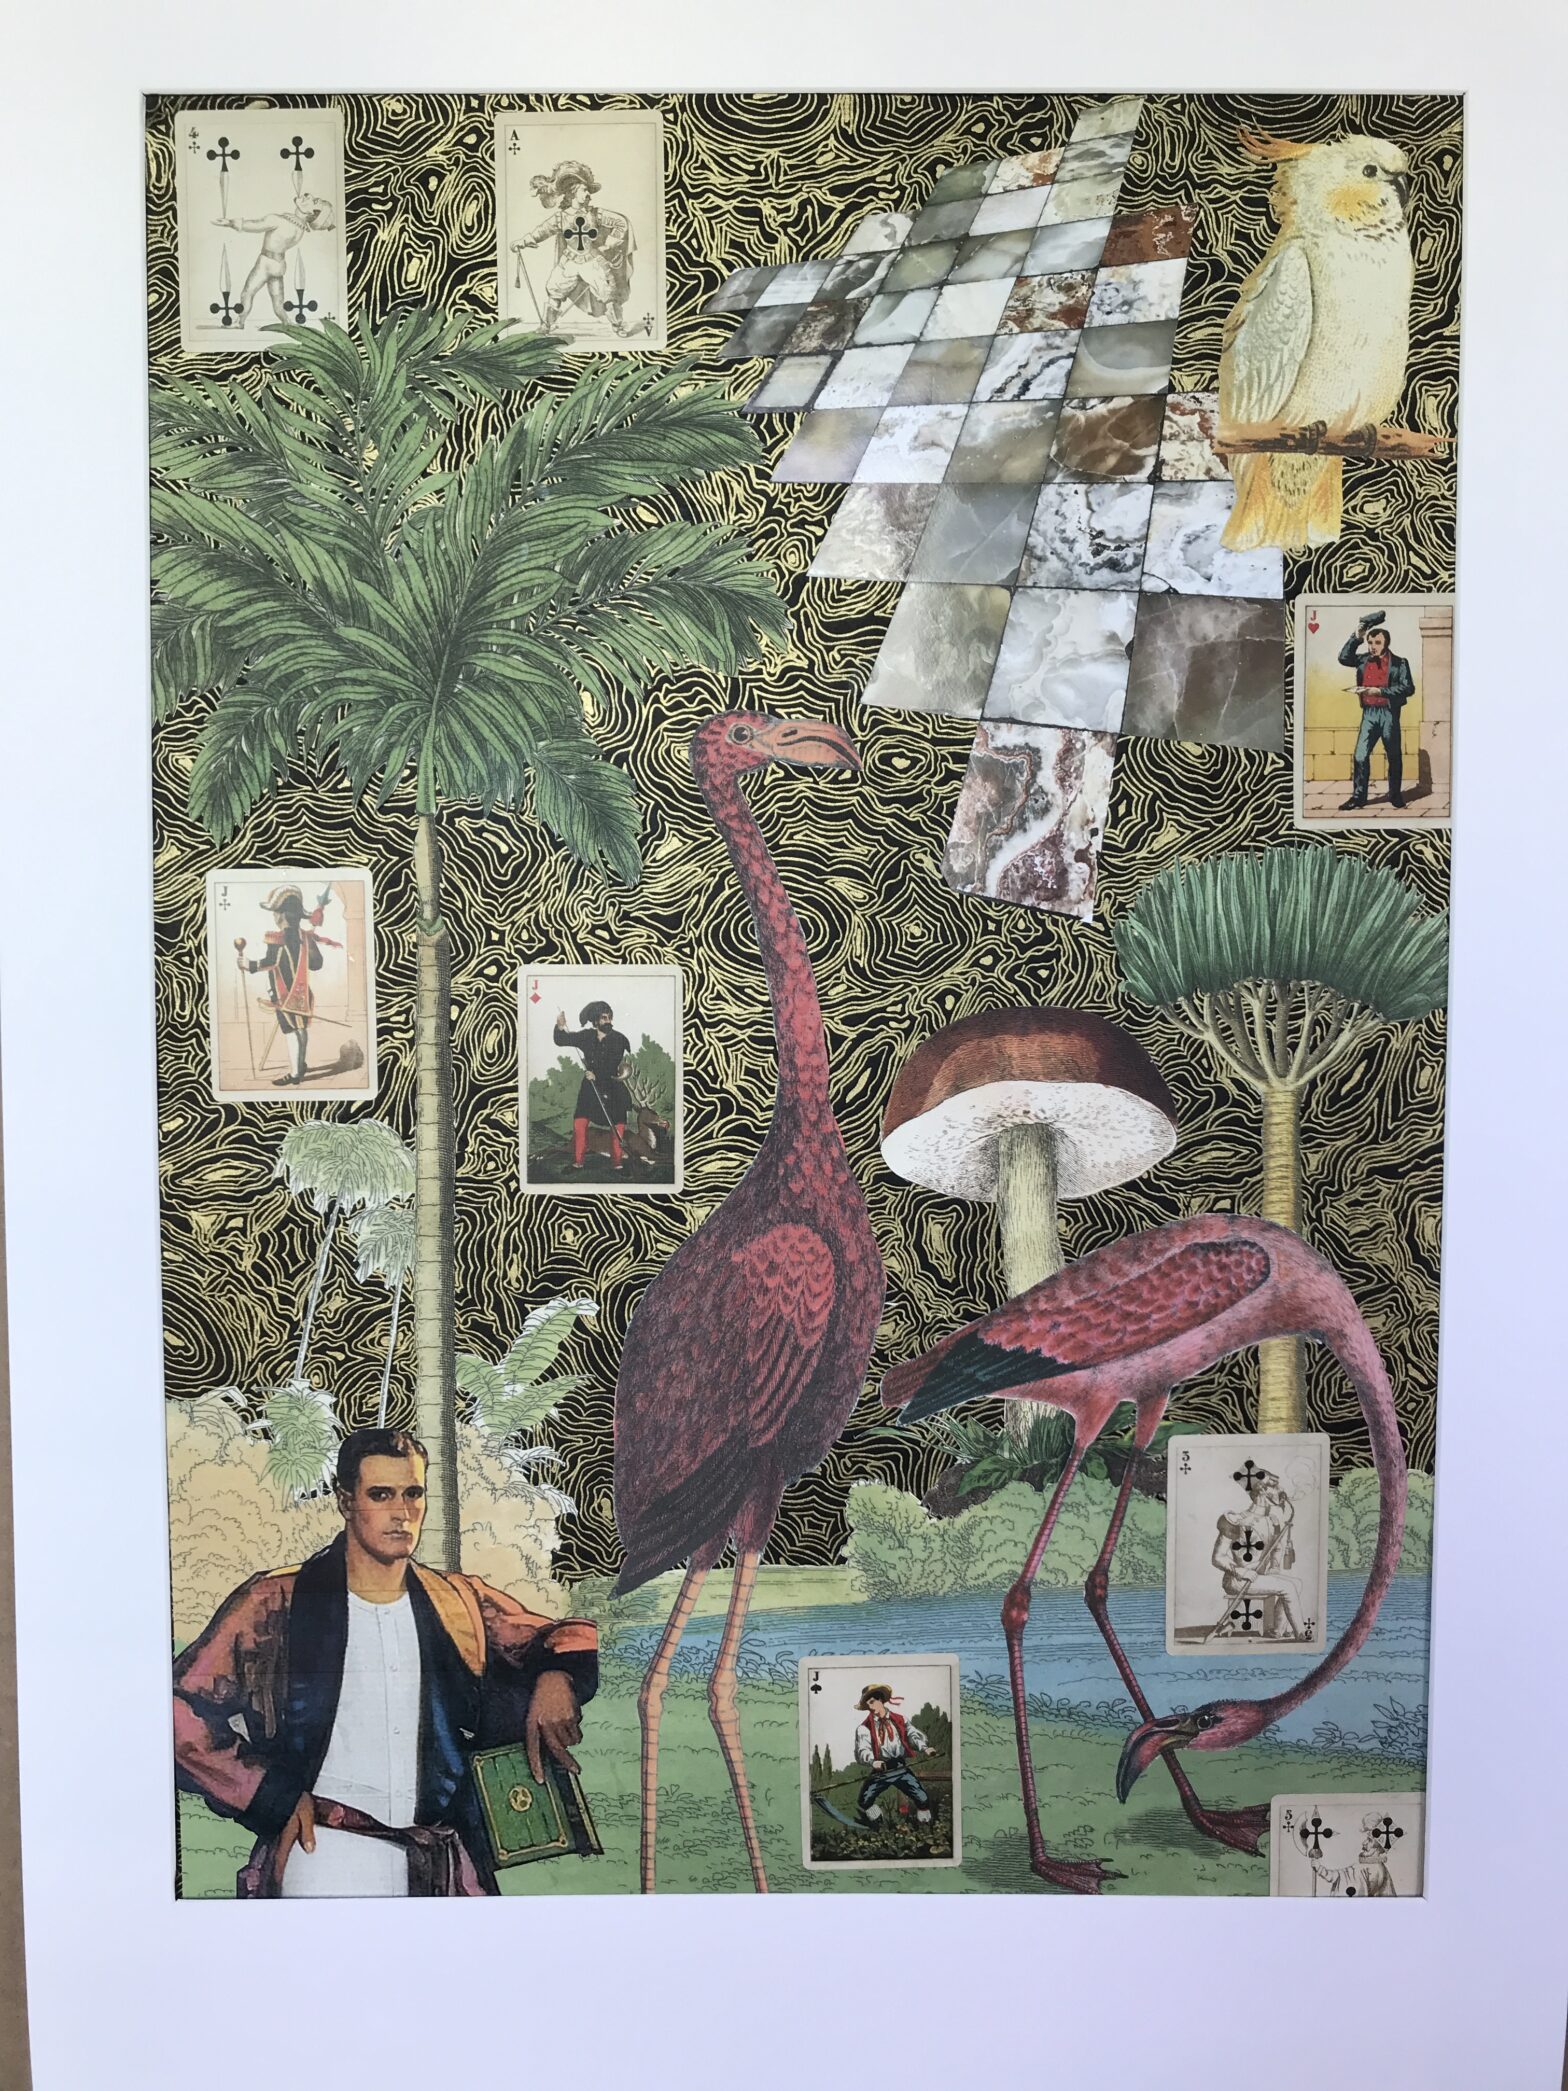 Collage of man, flamingos, palms